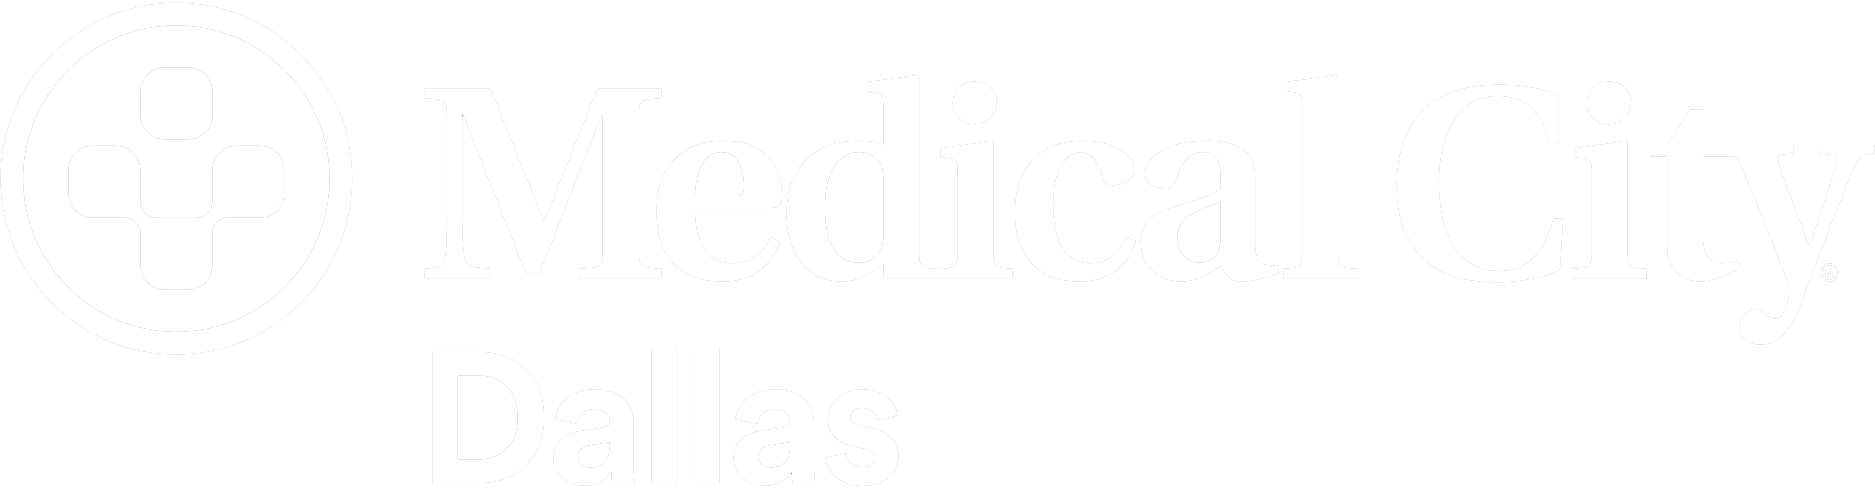 Medical White Logo - Medical City Dallas Hospital, TX. Medical City Dallas